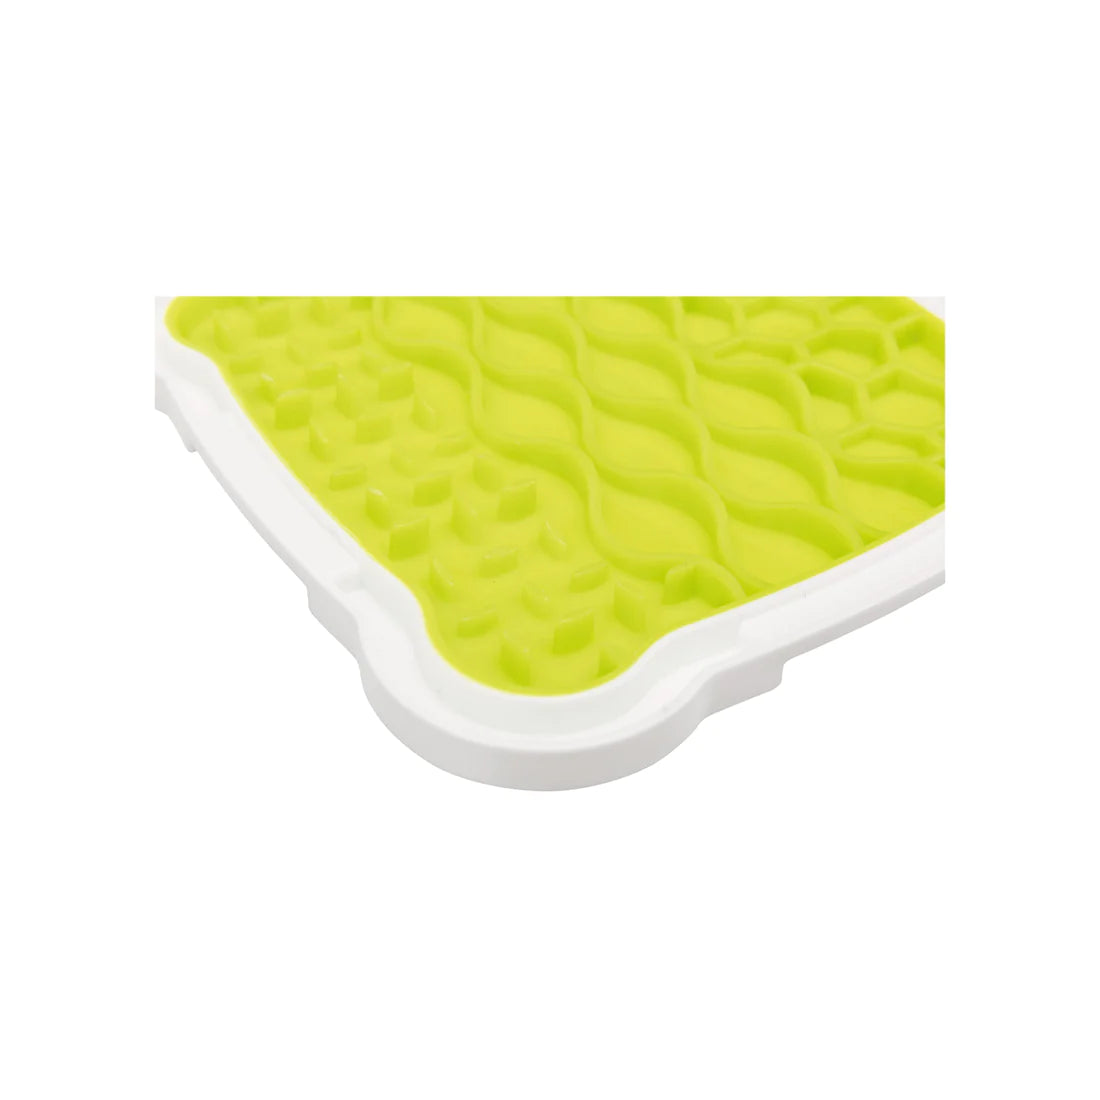 Lick’n’Snack Platter